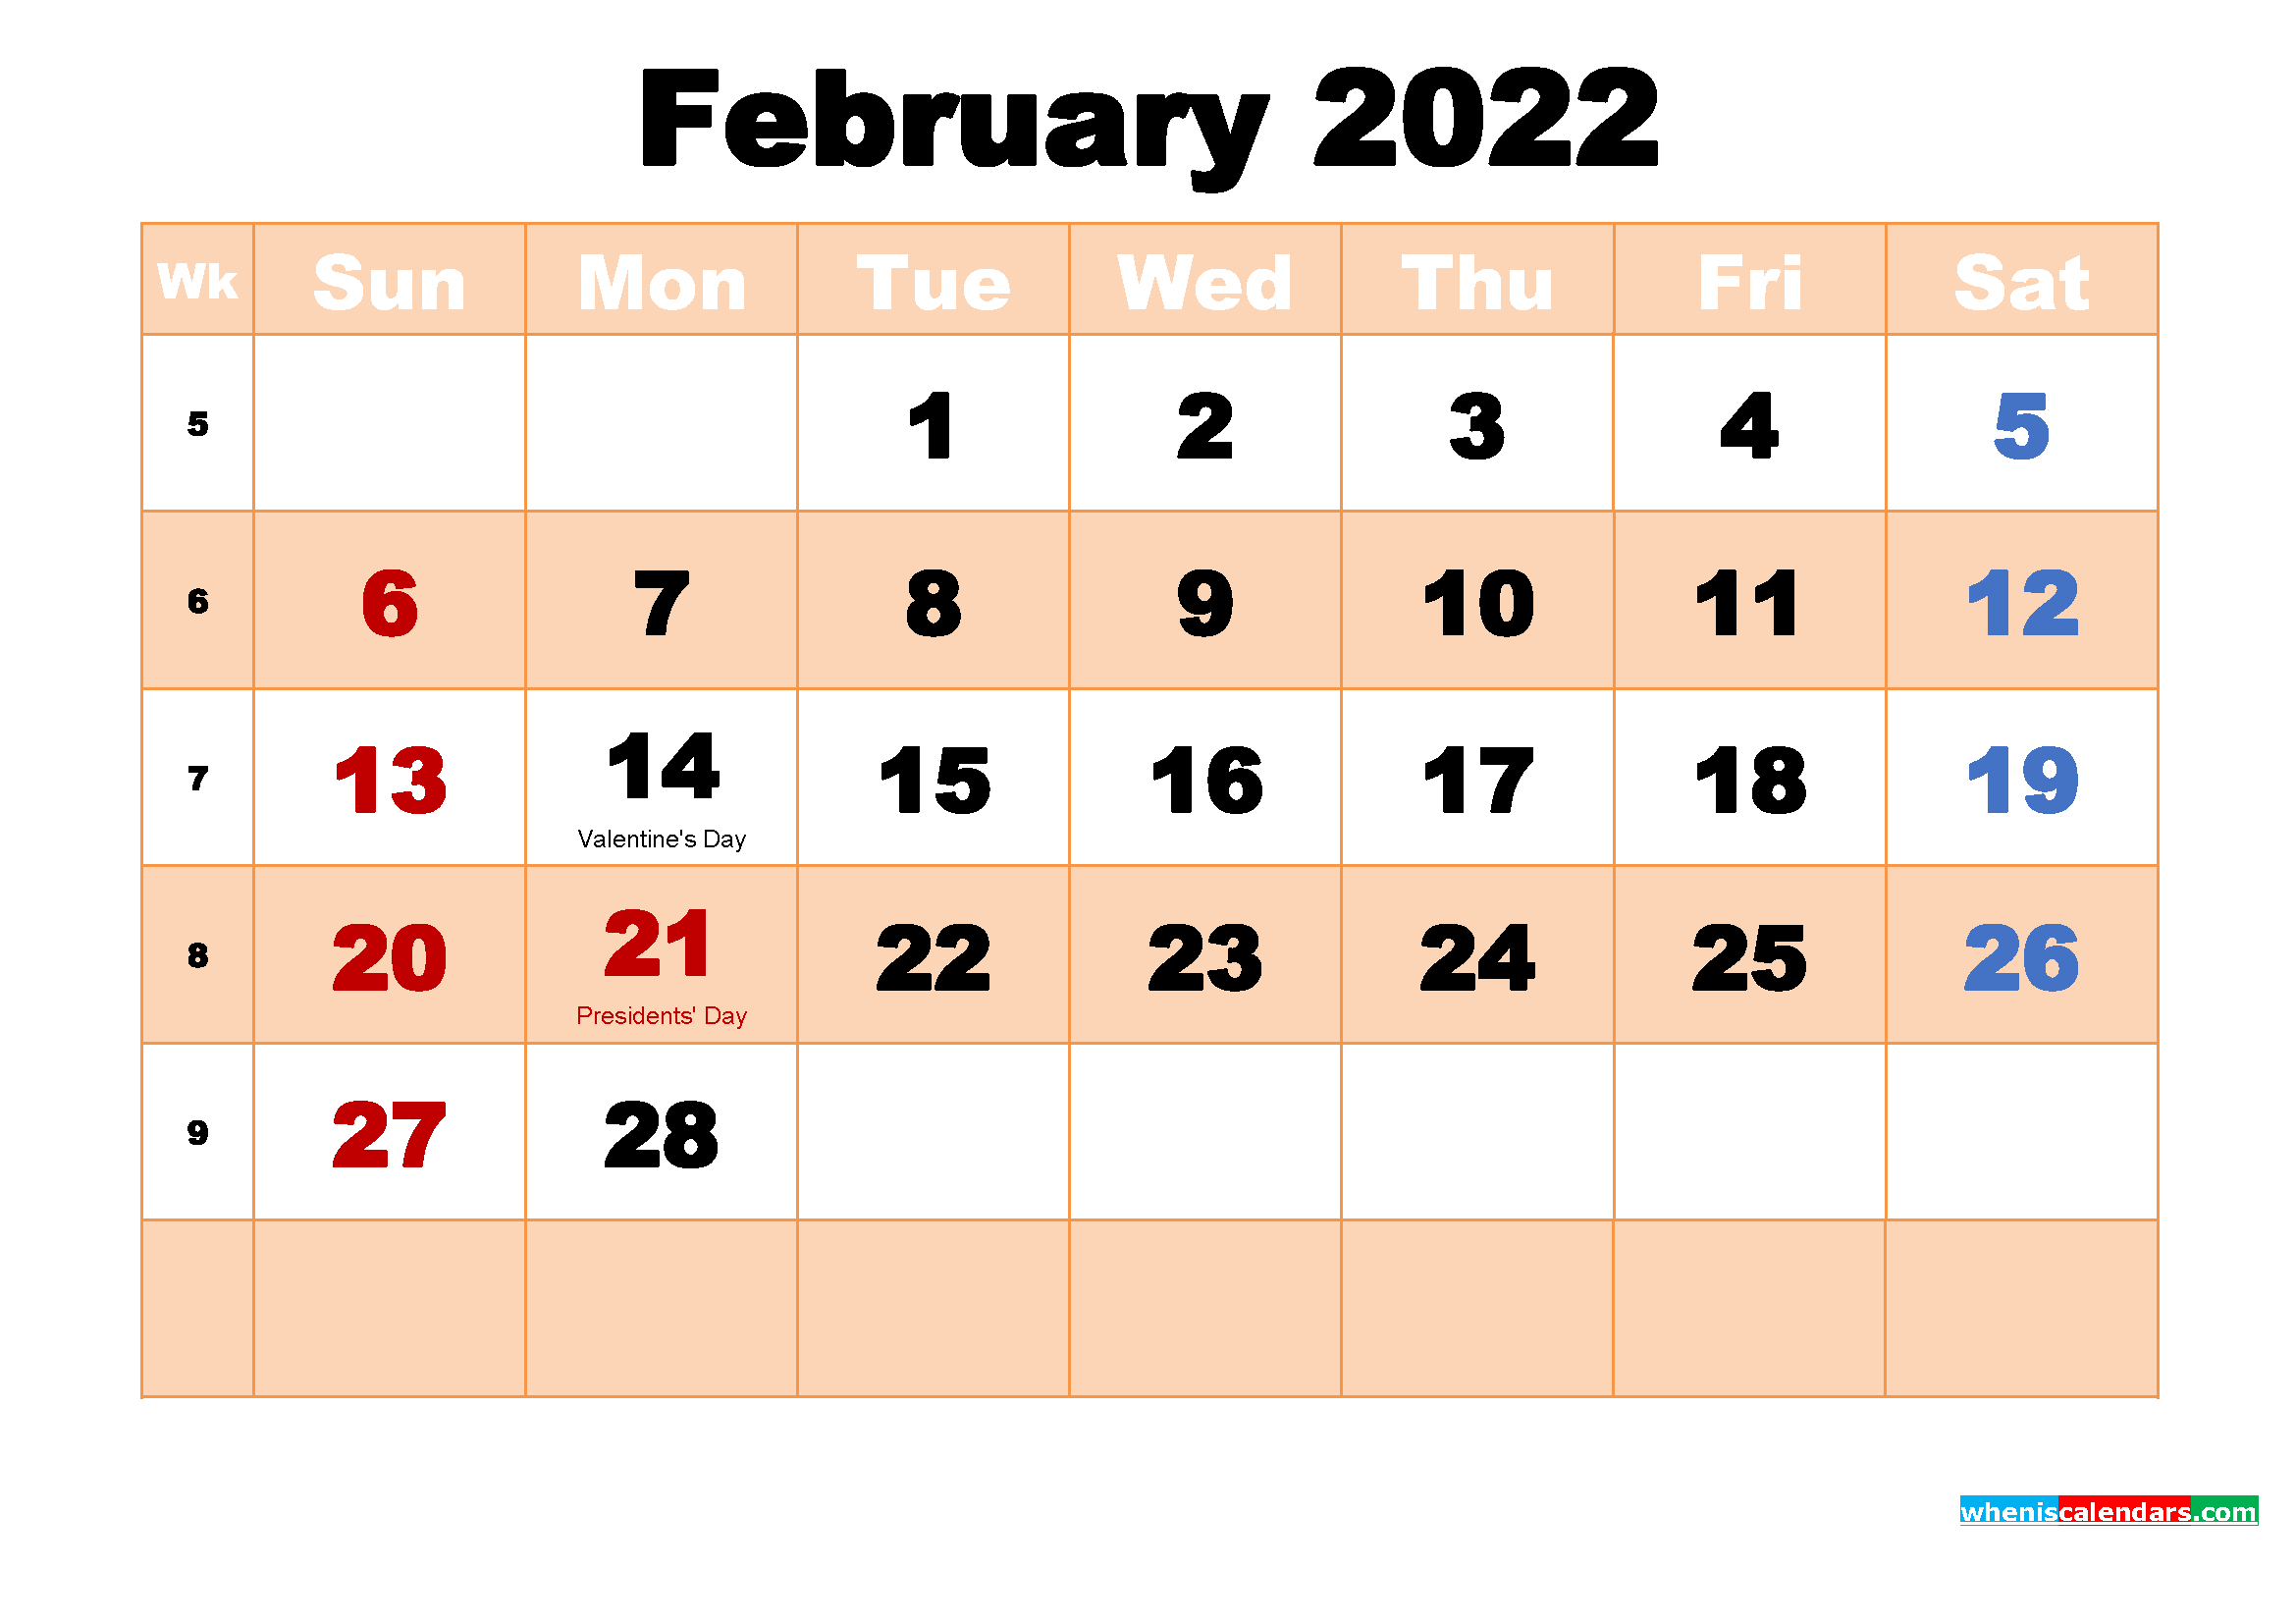 Free Printable February 2022 Calendar With Holidays